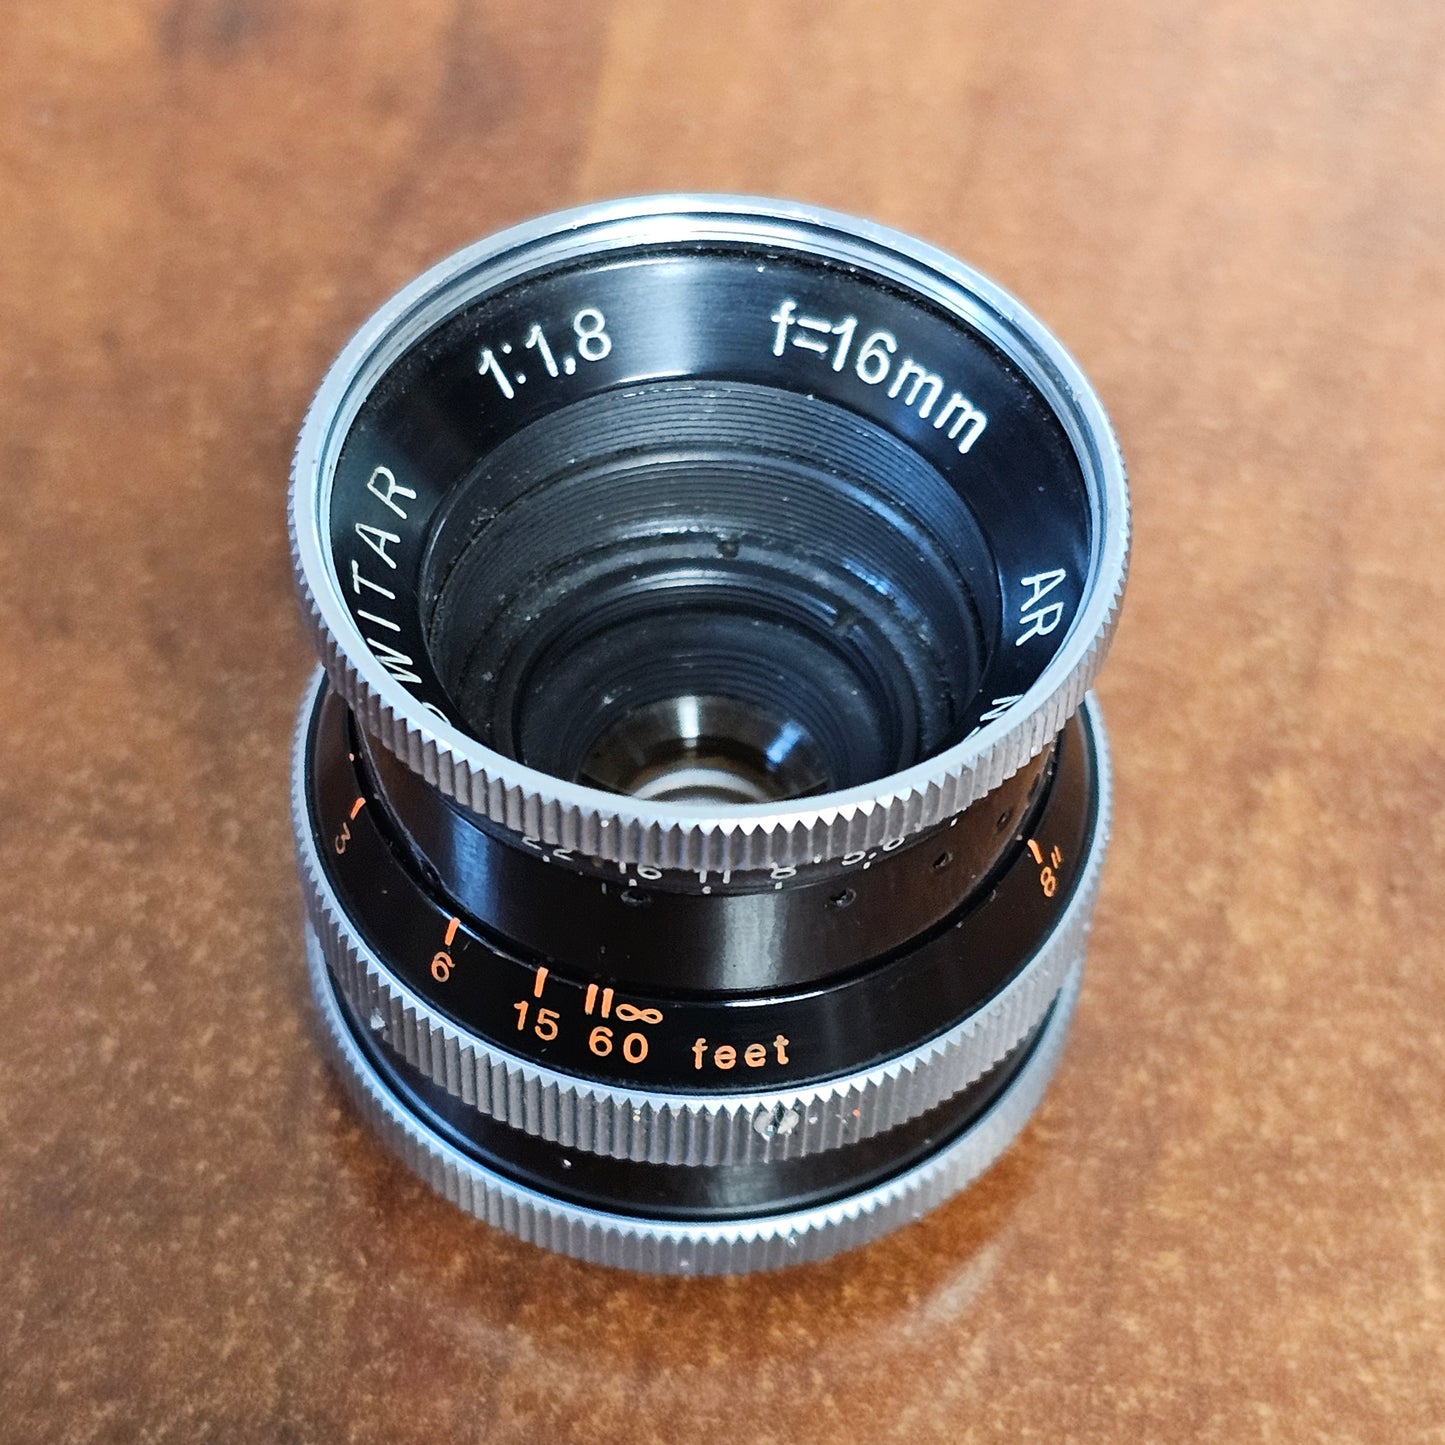 Switar 16mm f1.8 AR C-Mount Lens S# 753156